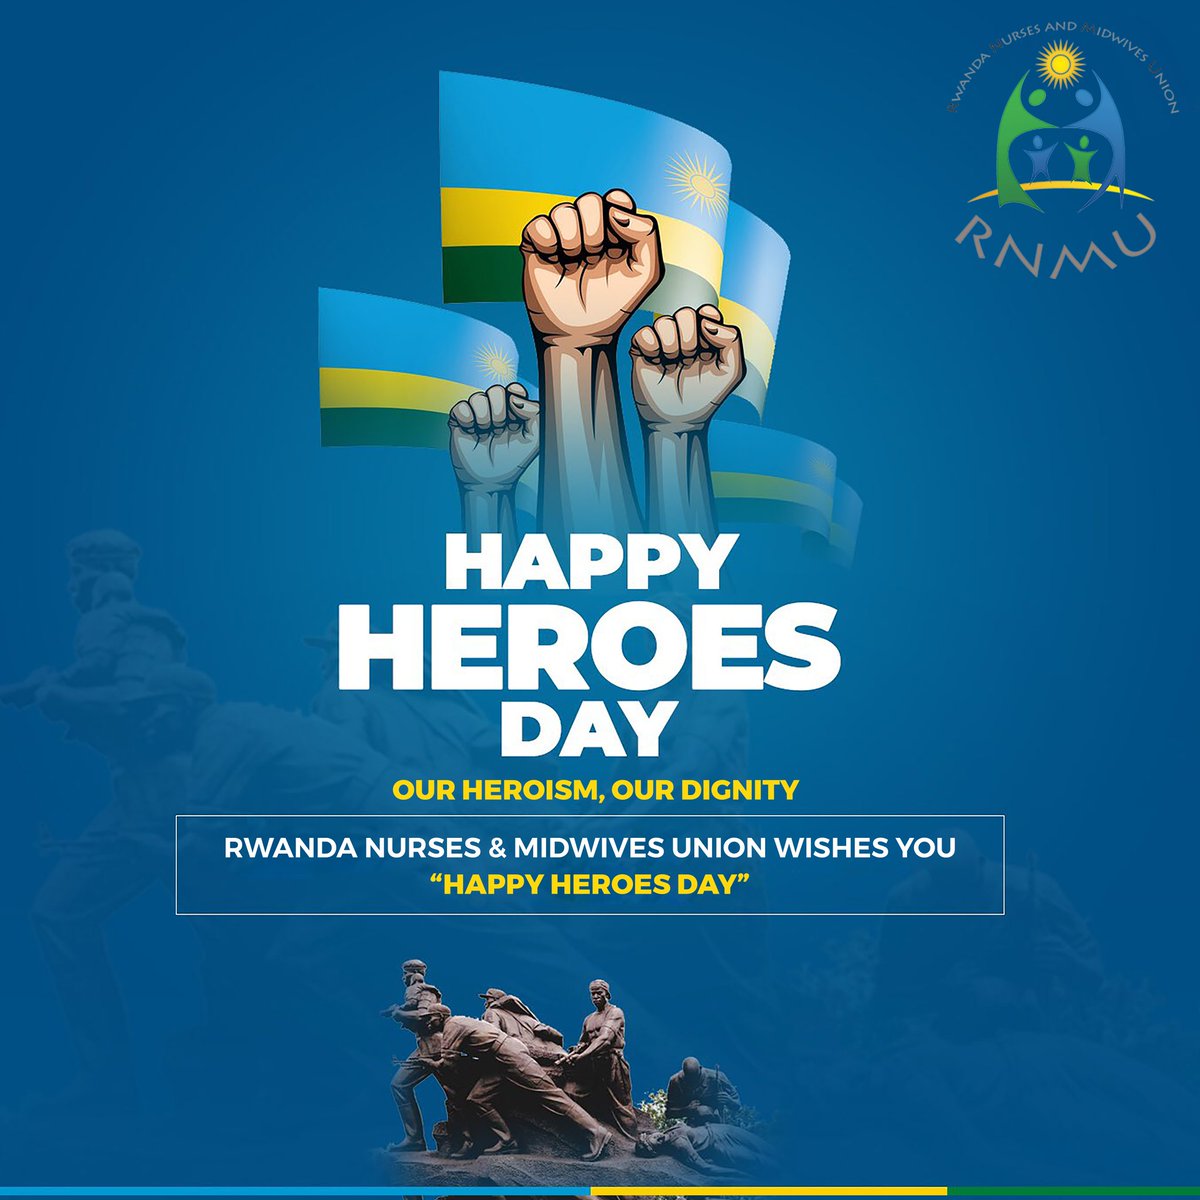 The Rwanda Nurses and Midwives Union wishes all Rwandans a great day on Heroes' day .@btntvrwanda @gitembas2020 @rbarwanda